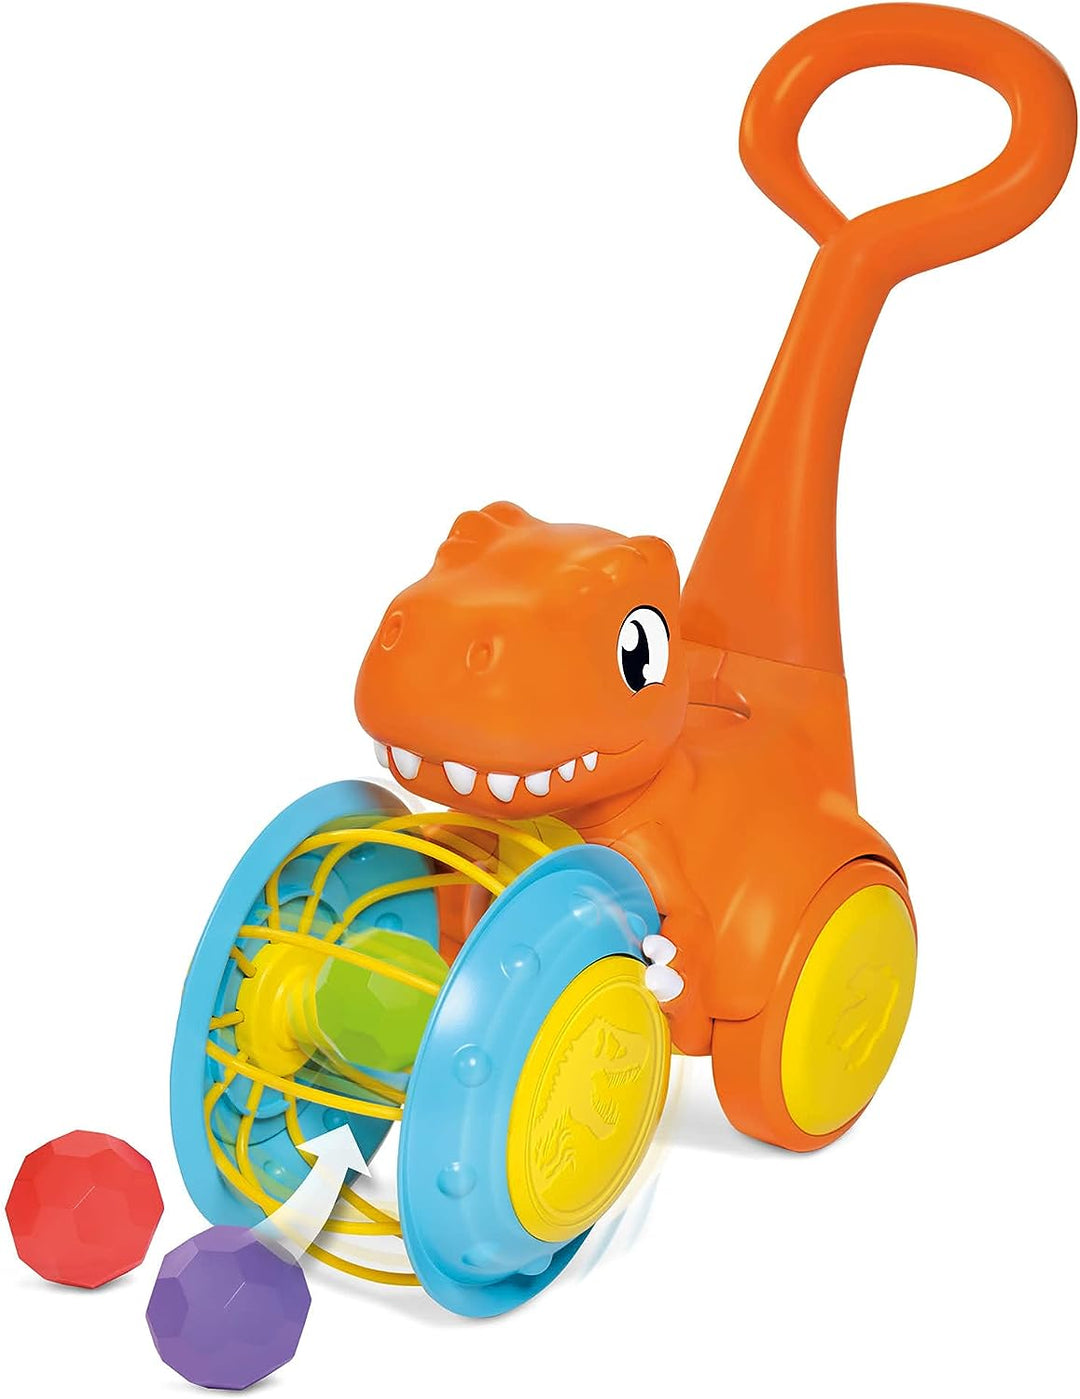 Toomies E73254 Tomy Pic & Push T. Rex, Children, Jurassic World, Educational Push & Go Vehicle, Colourful Dinosaur Toy for Baby Boys & Girls